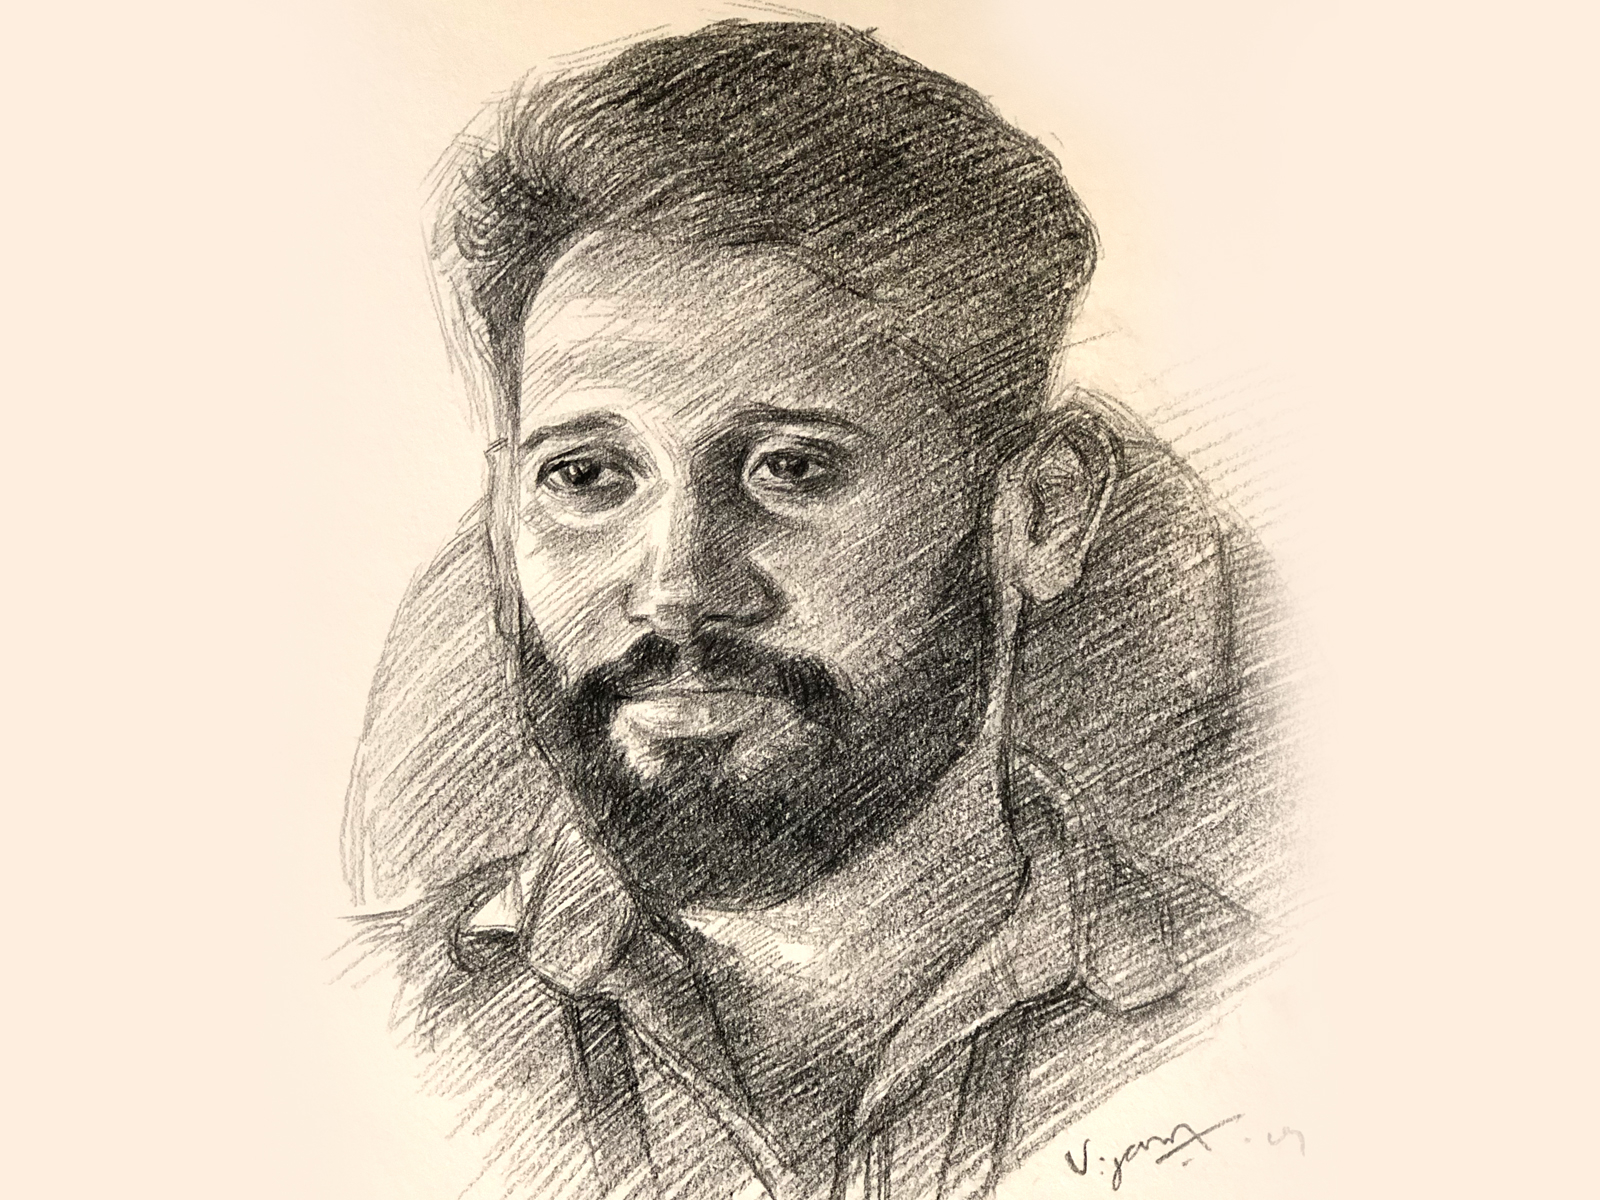 Artist Namboothiri Sketchesഇലലസടരഷൻ രഗതത വപലവ സഷടചച  നമപതര  artist namboothiri illustrations and its perspectives  Samayam  Malayalam